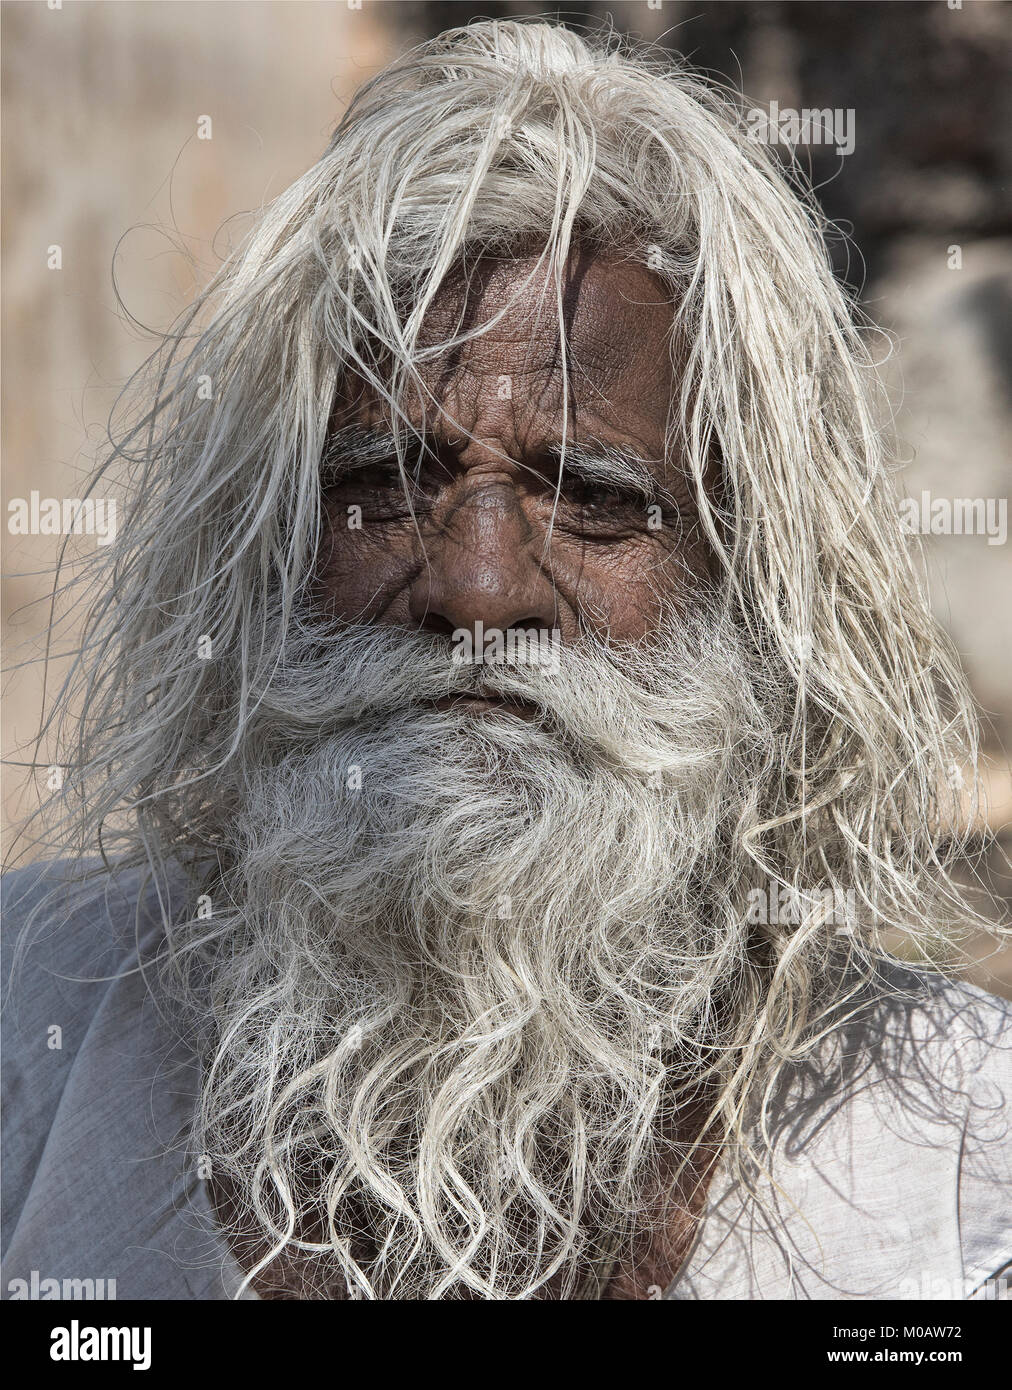 Old baba with white hair and beard, Pushkar, Rajasthan, India Stock Photo